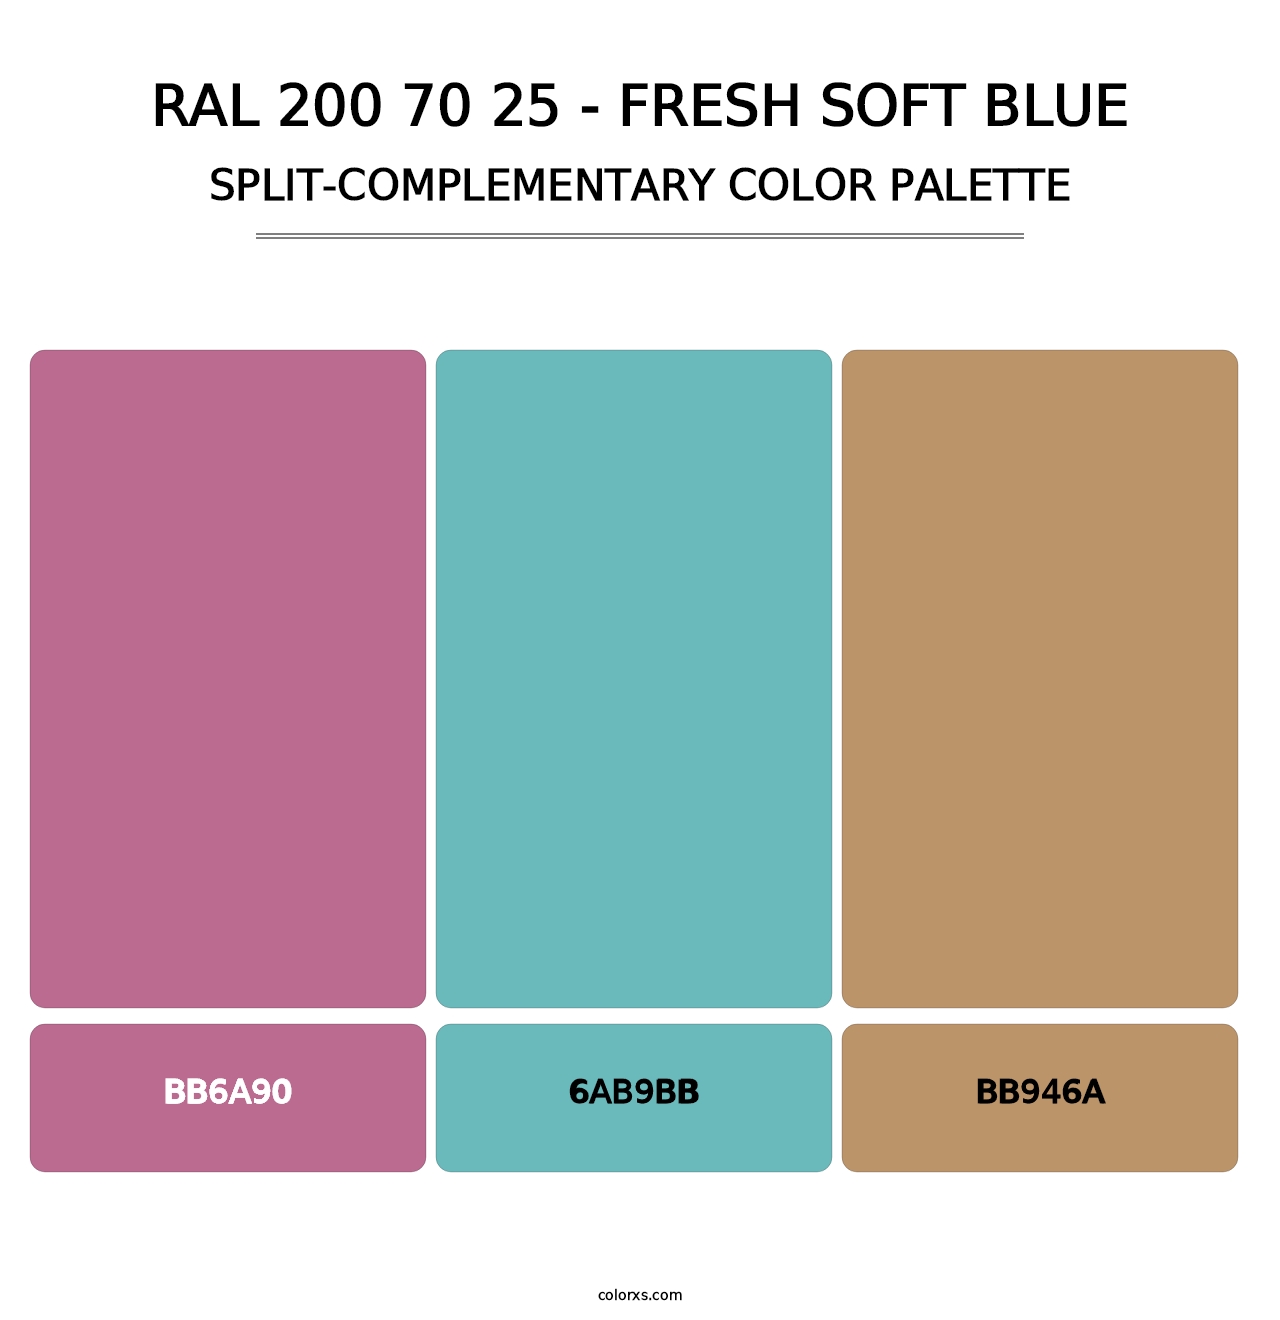 RAL 200 70 25 - Fresh Soft Blue - Split-Complementary Color Palette